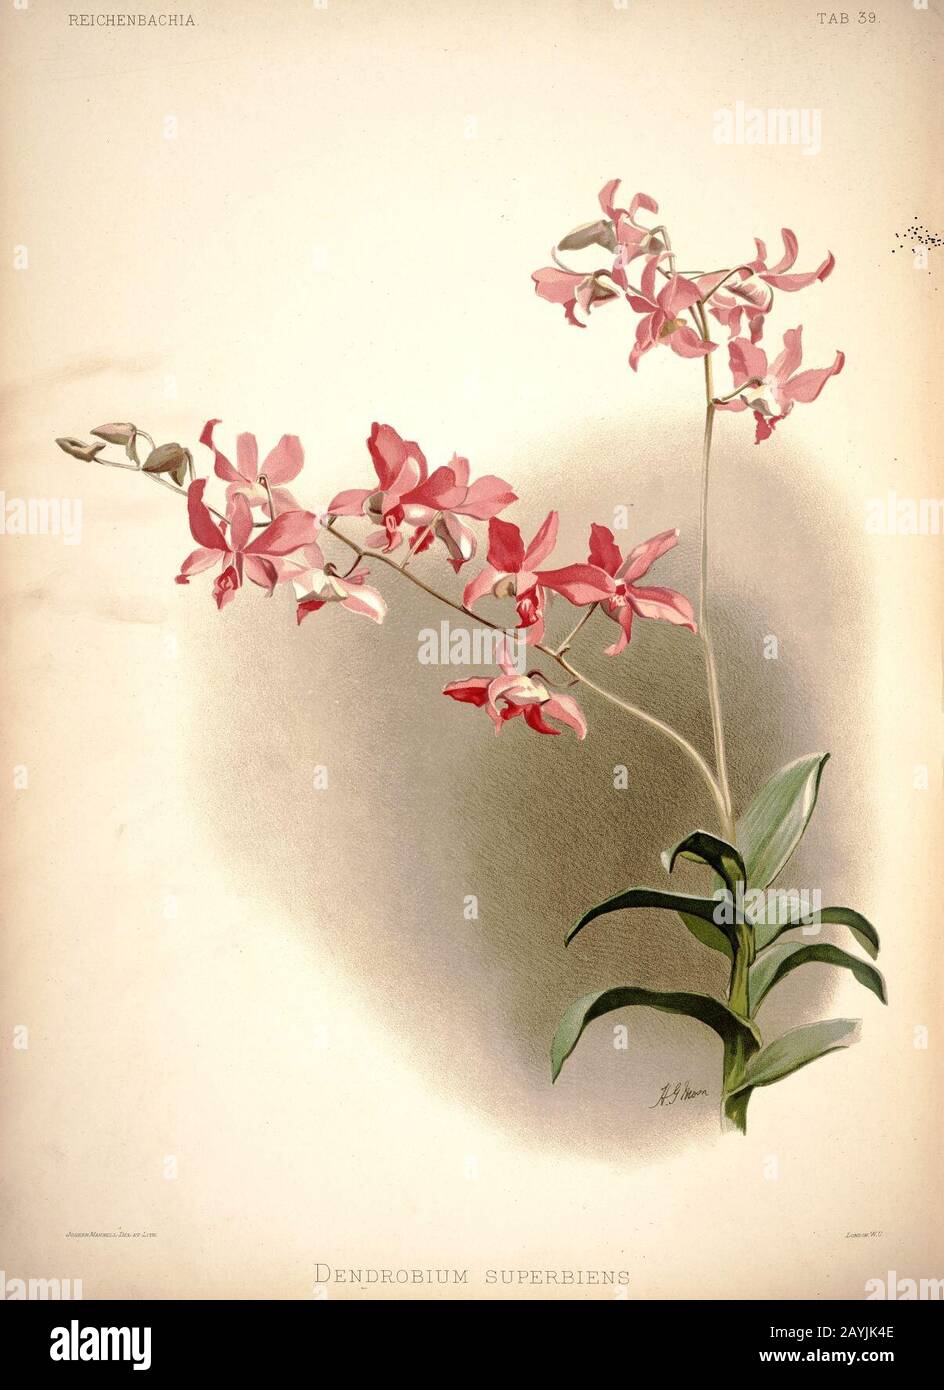 Frederick Sander - Reichenbachia I plate 39 (1888) - Dendrobium superbiens. Stock Photo